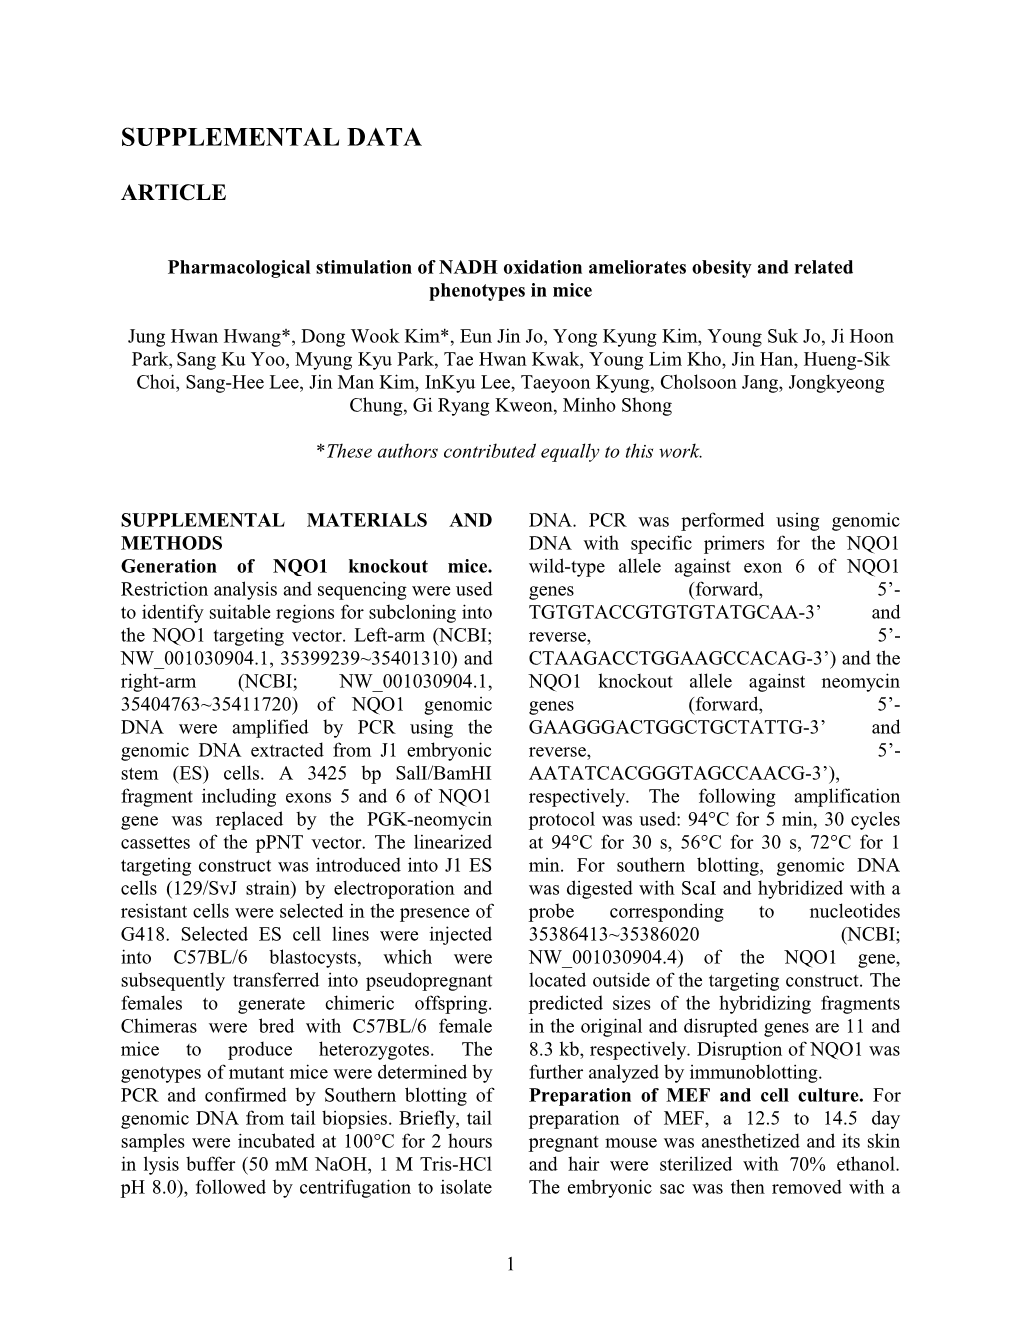 Pharmacological Stimulation of NADH Oxidation Ameliorates Obesity and Related Phenotypes